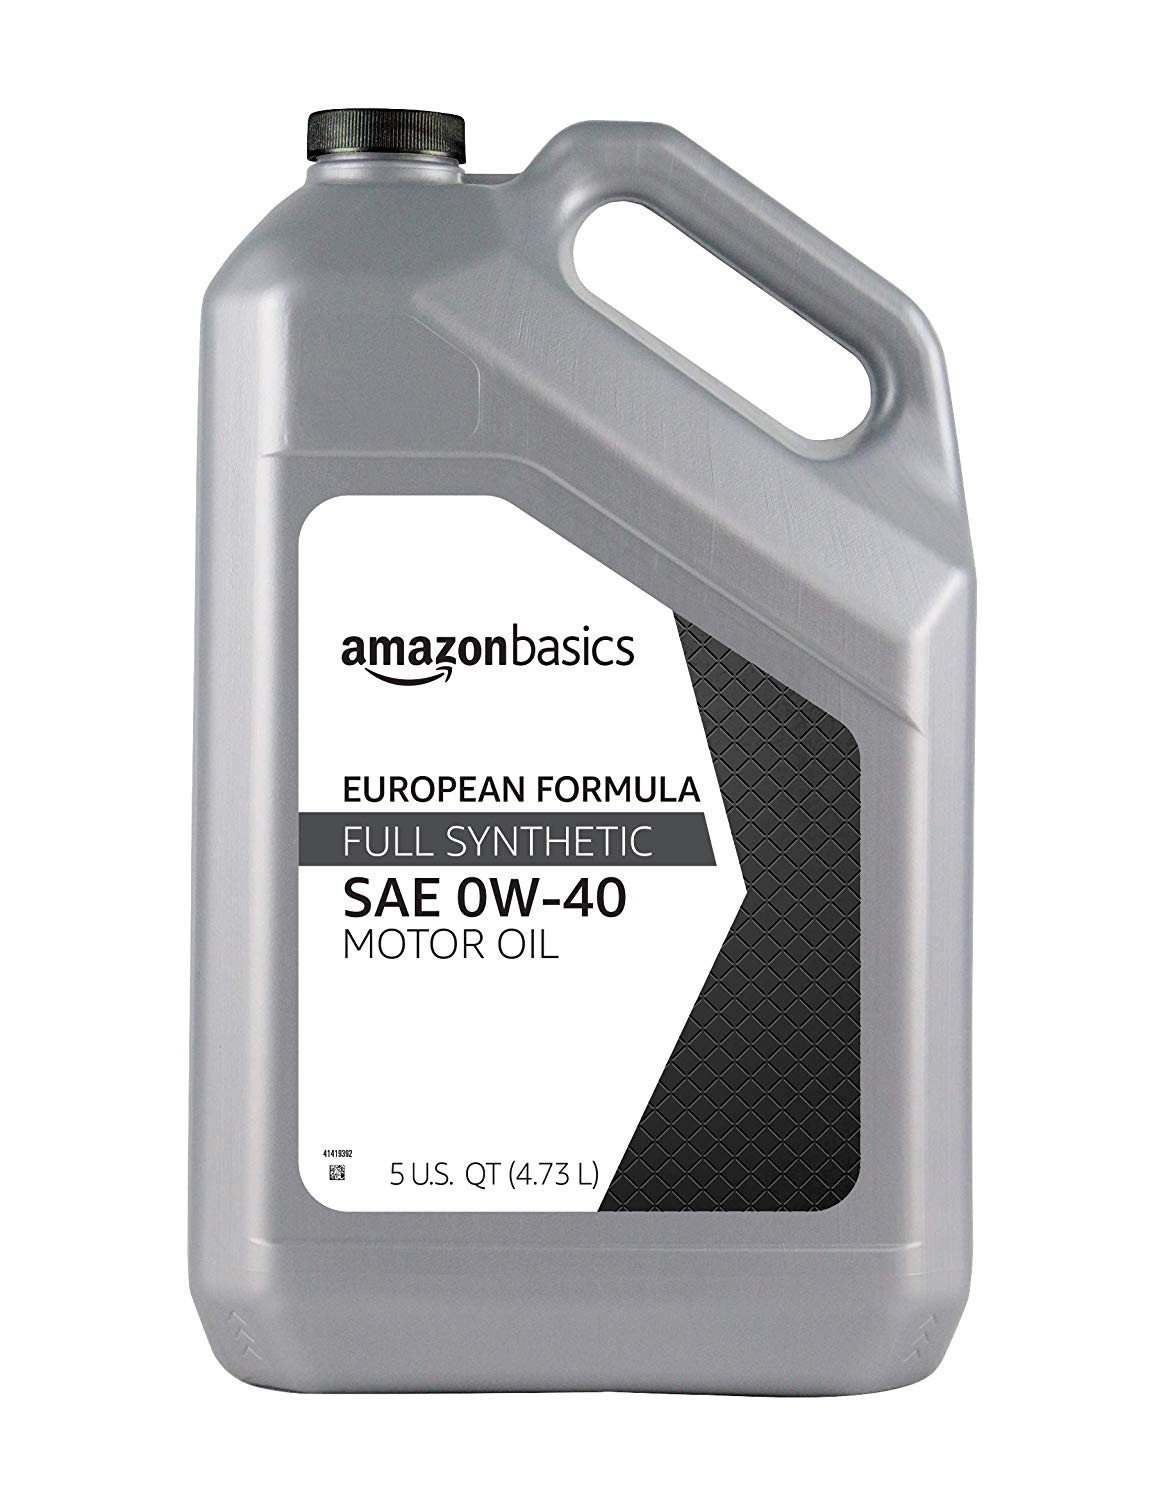 AmazonBasics Full Synthetic Motor Oil, Euro Formula for Turbo-Charged Vehicles, API SN, A3/B4, 0W-40, 5 Quart